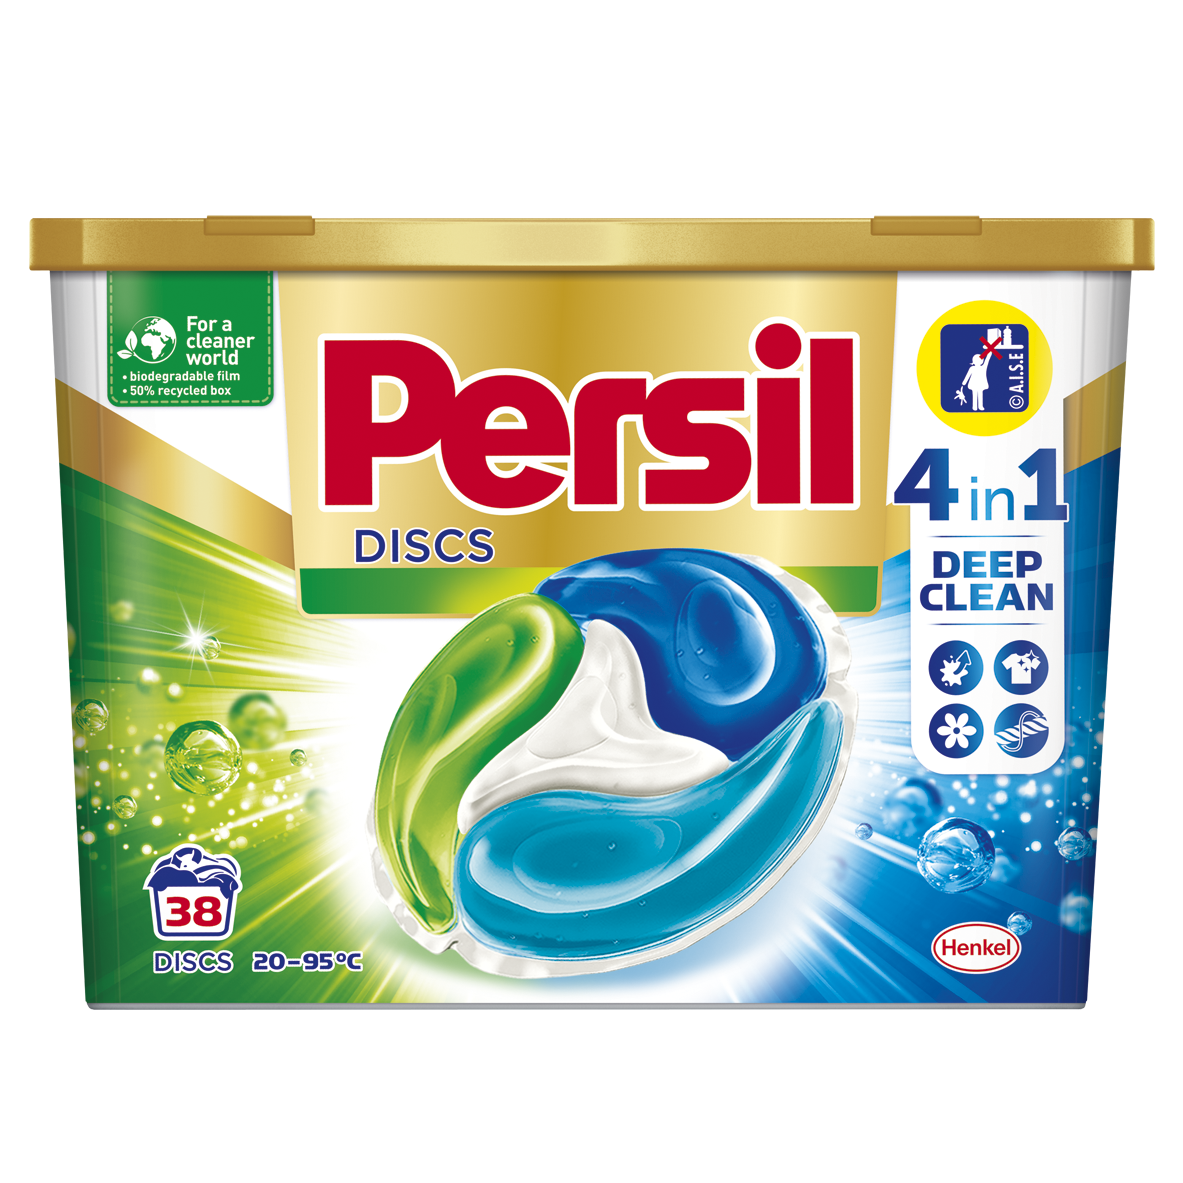 Гель для прання в капсулах Persil Discs Universal Deep Clean, 38 шт. (825759) - фото 1